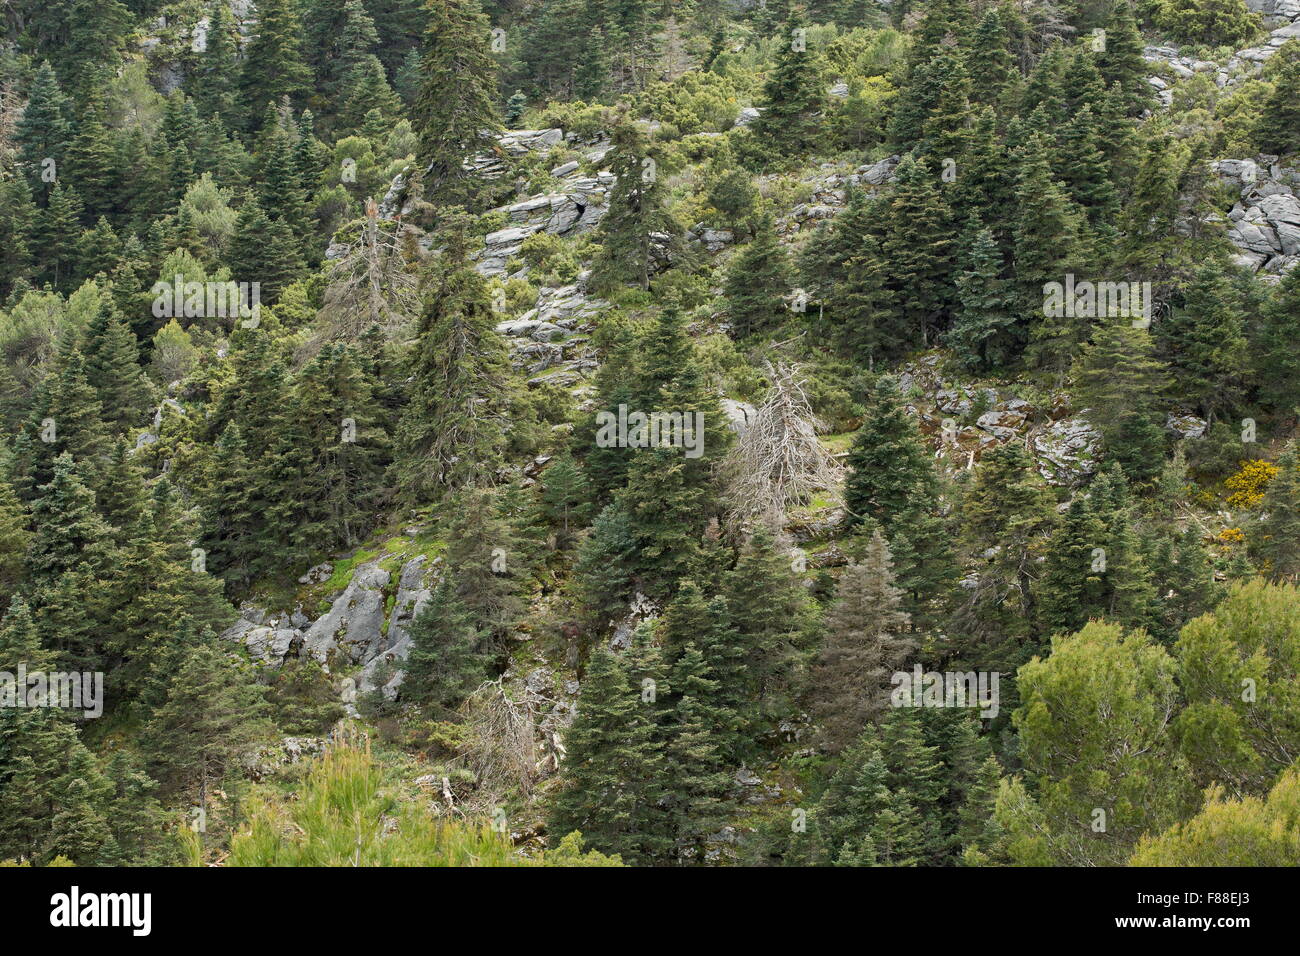 Spanish fir, Abies pinsapo, ancient forest at 1200 metres, Sierra de Las Nieves, south-west Spain. Stock Photo